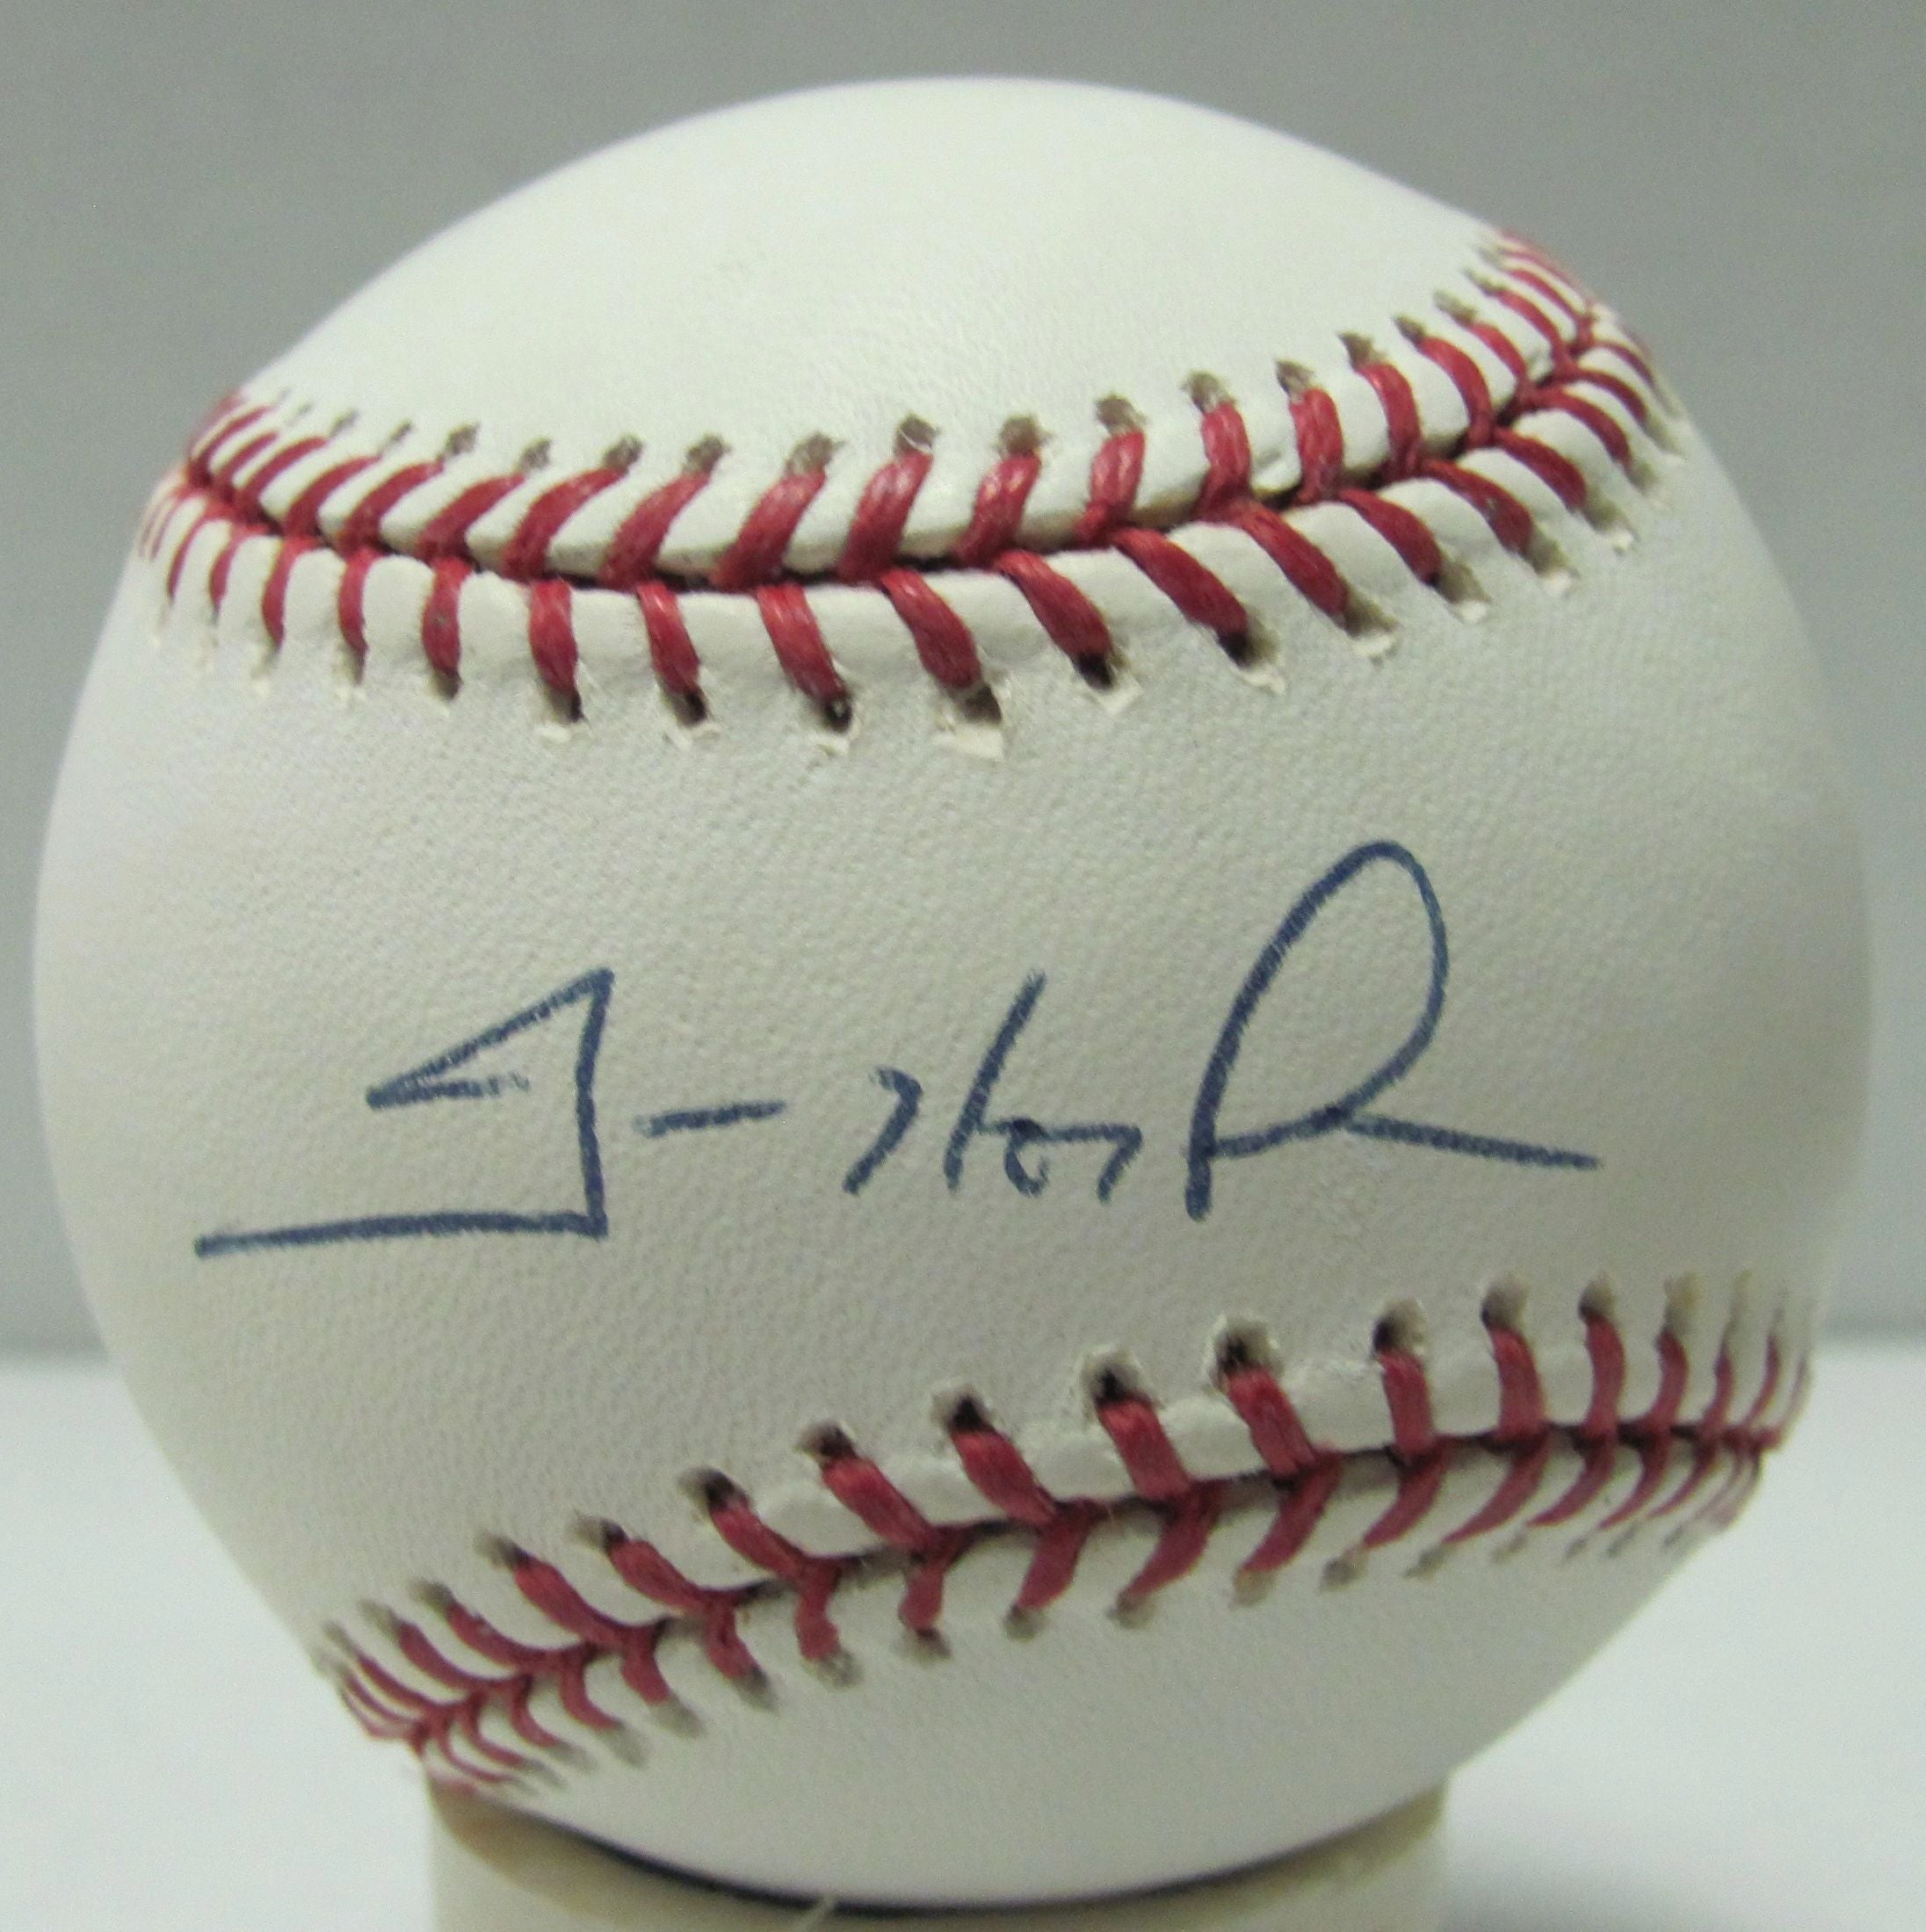 Trevor Hoffman Signed Baseball - Official Major League Baseball Allen "Bud" Selig" W/JSA COA Free Shipping!!